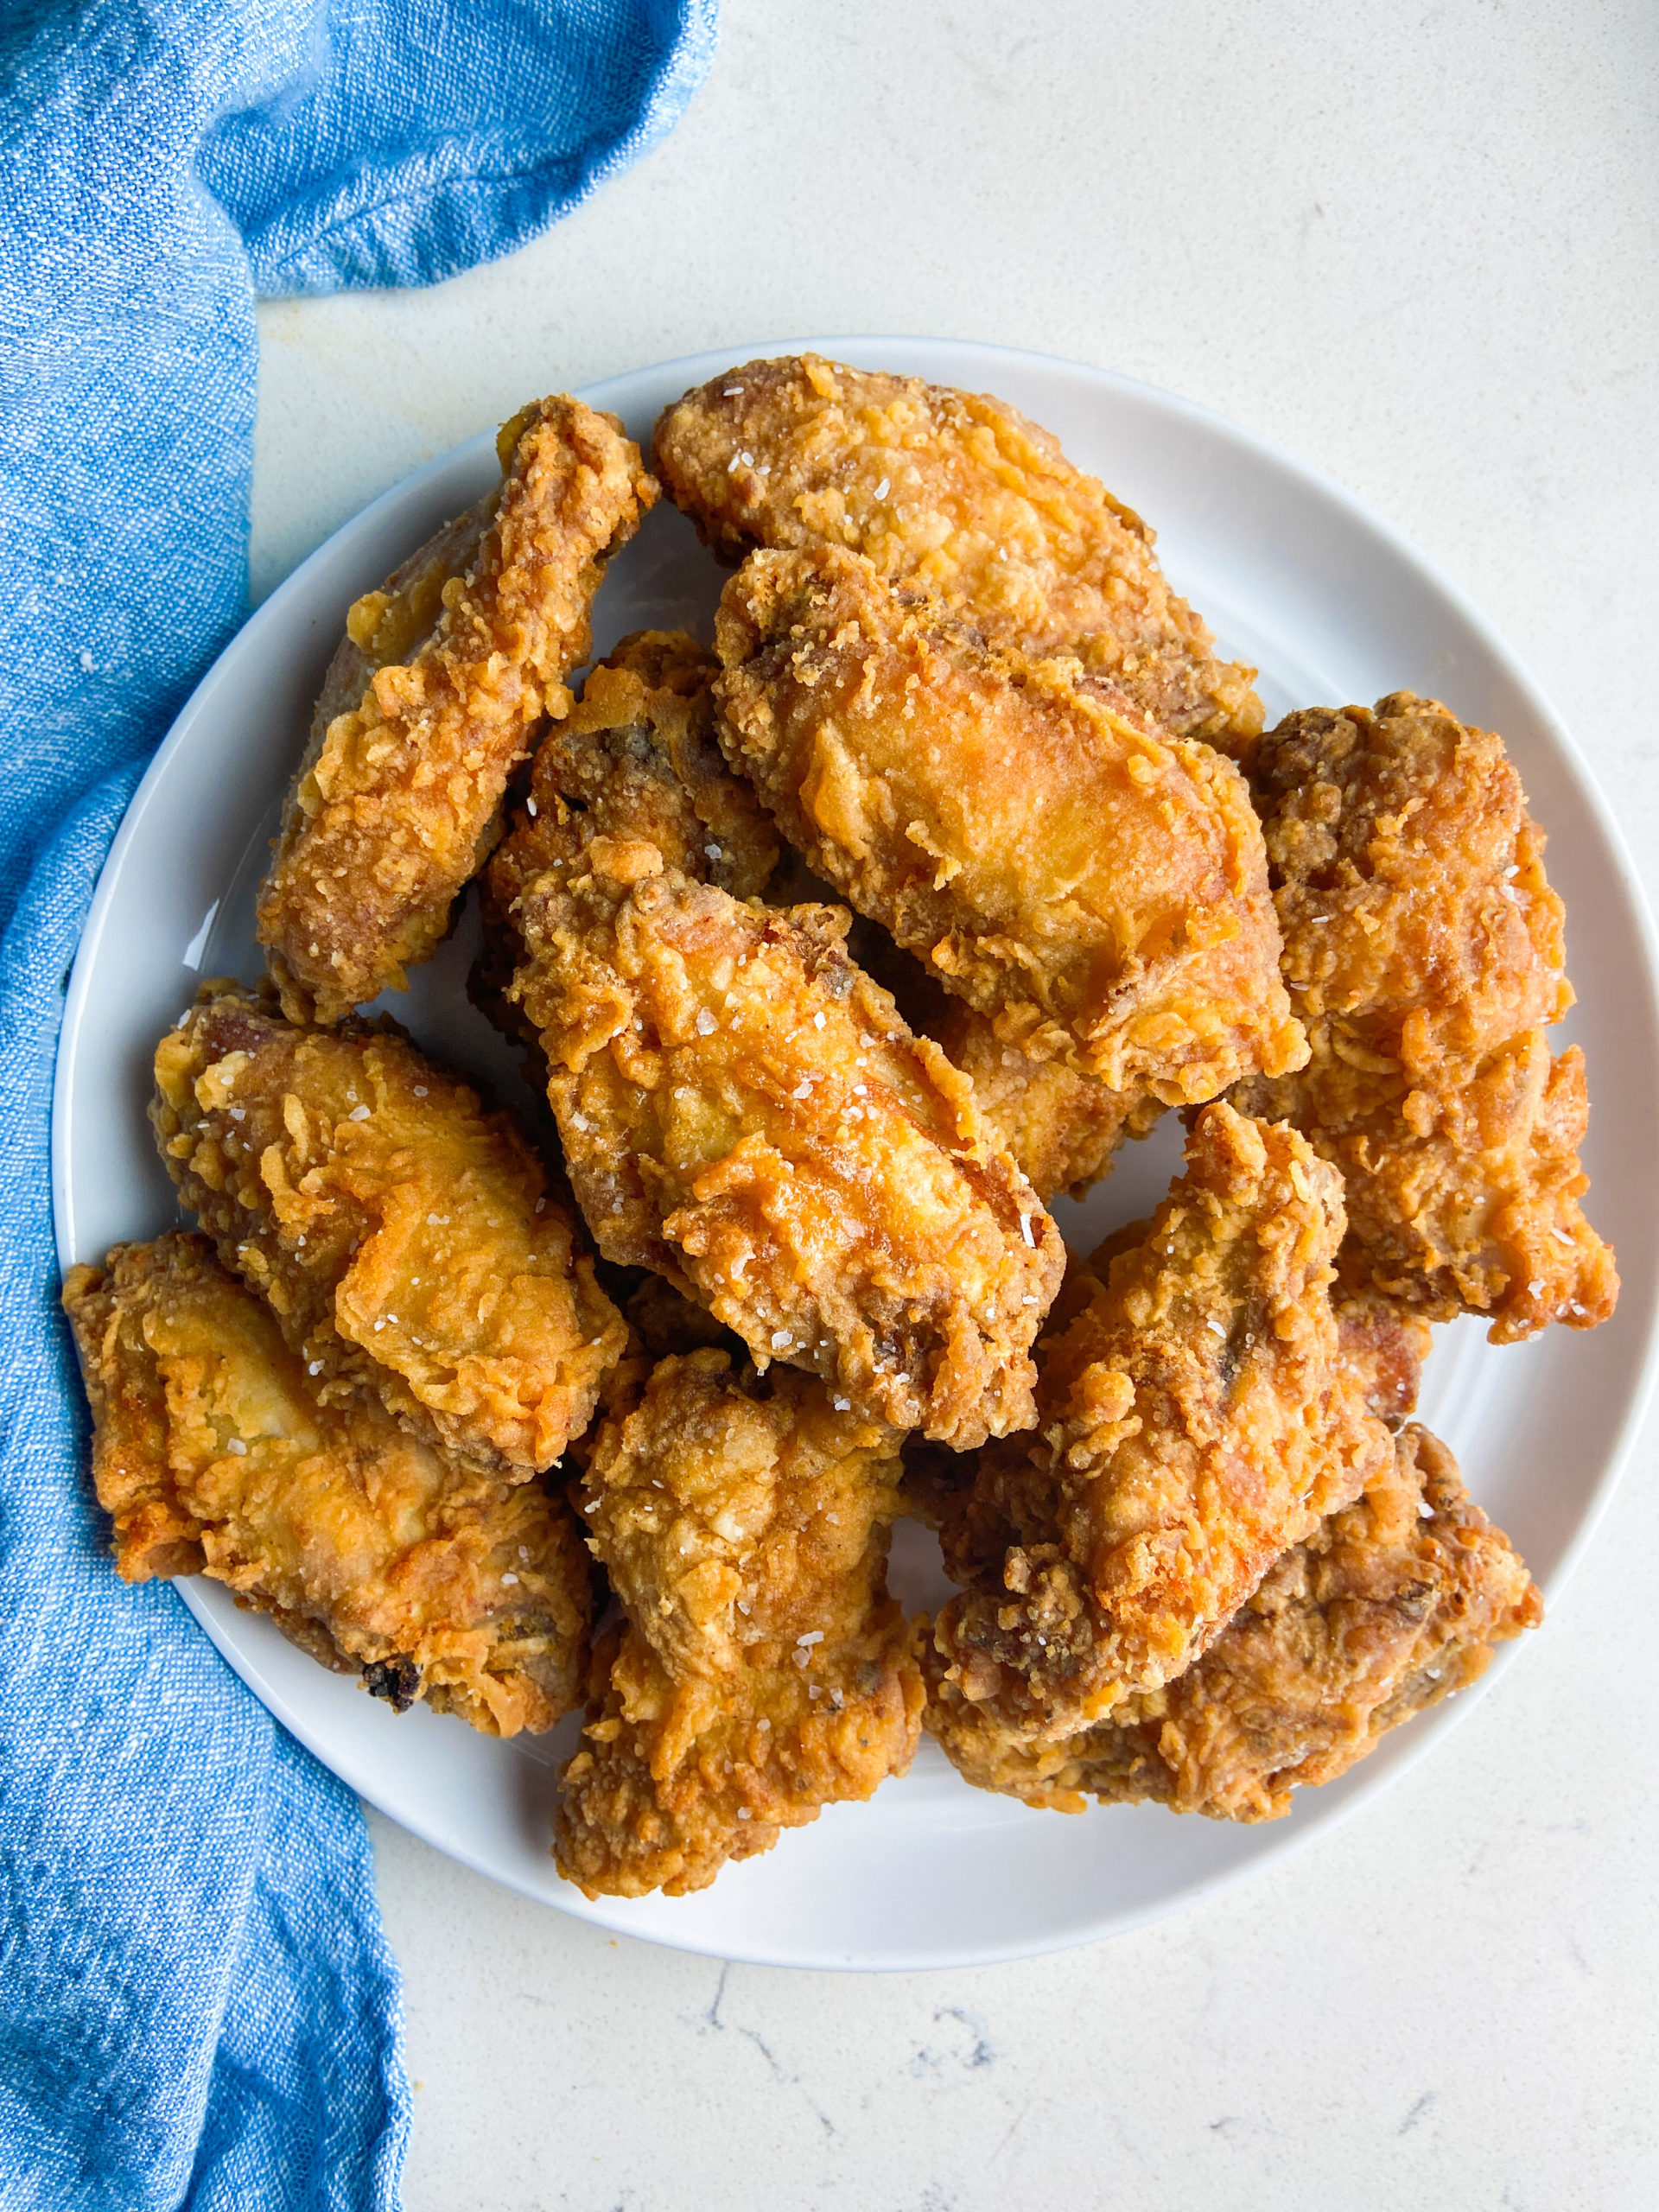 https://www.lifesambrosia.com/wp-content/uploads/Deep-Fried-Chicken-Wings-Recipe-Photo-11-scaled.jpg